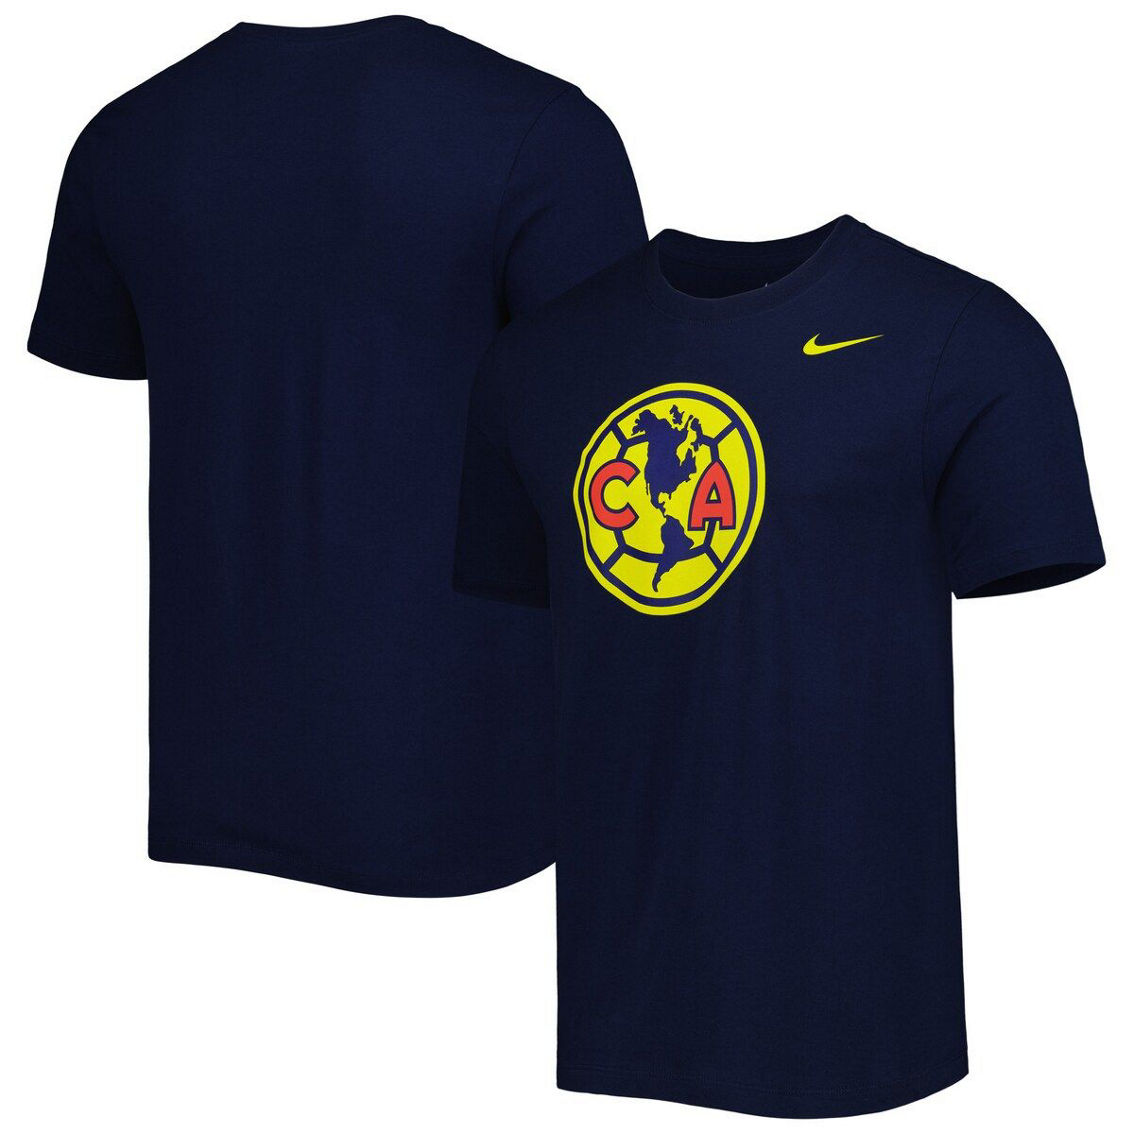 Nike Men's Navy Club America Core T-Shirt - Image 2 of 4